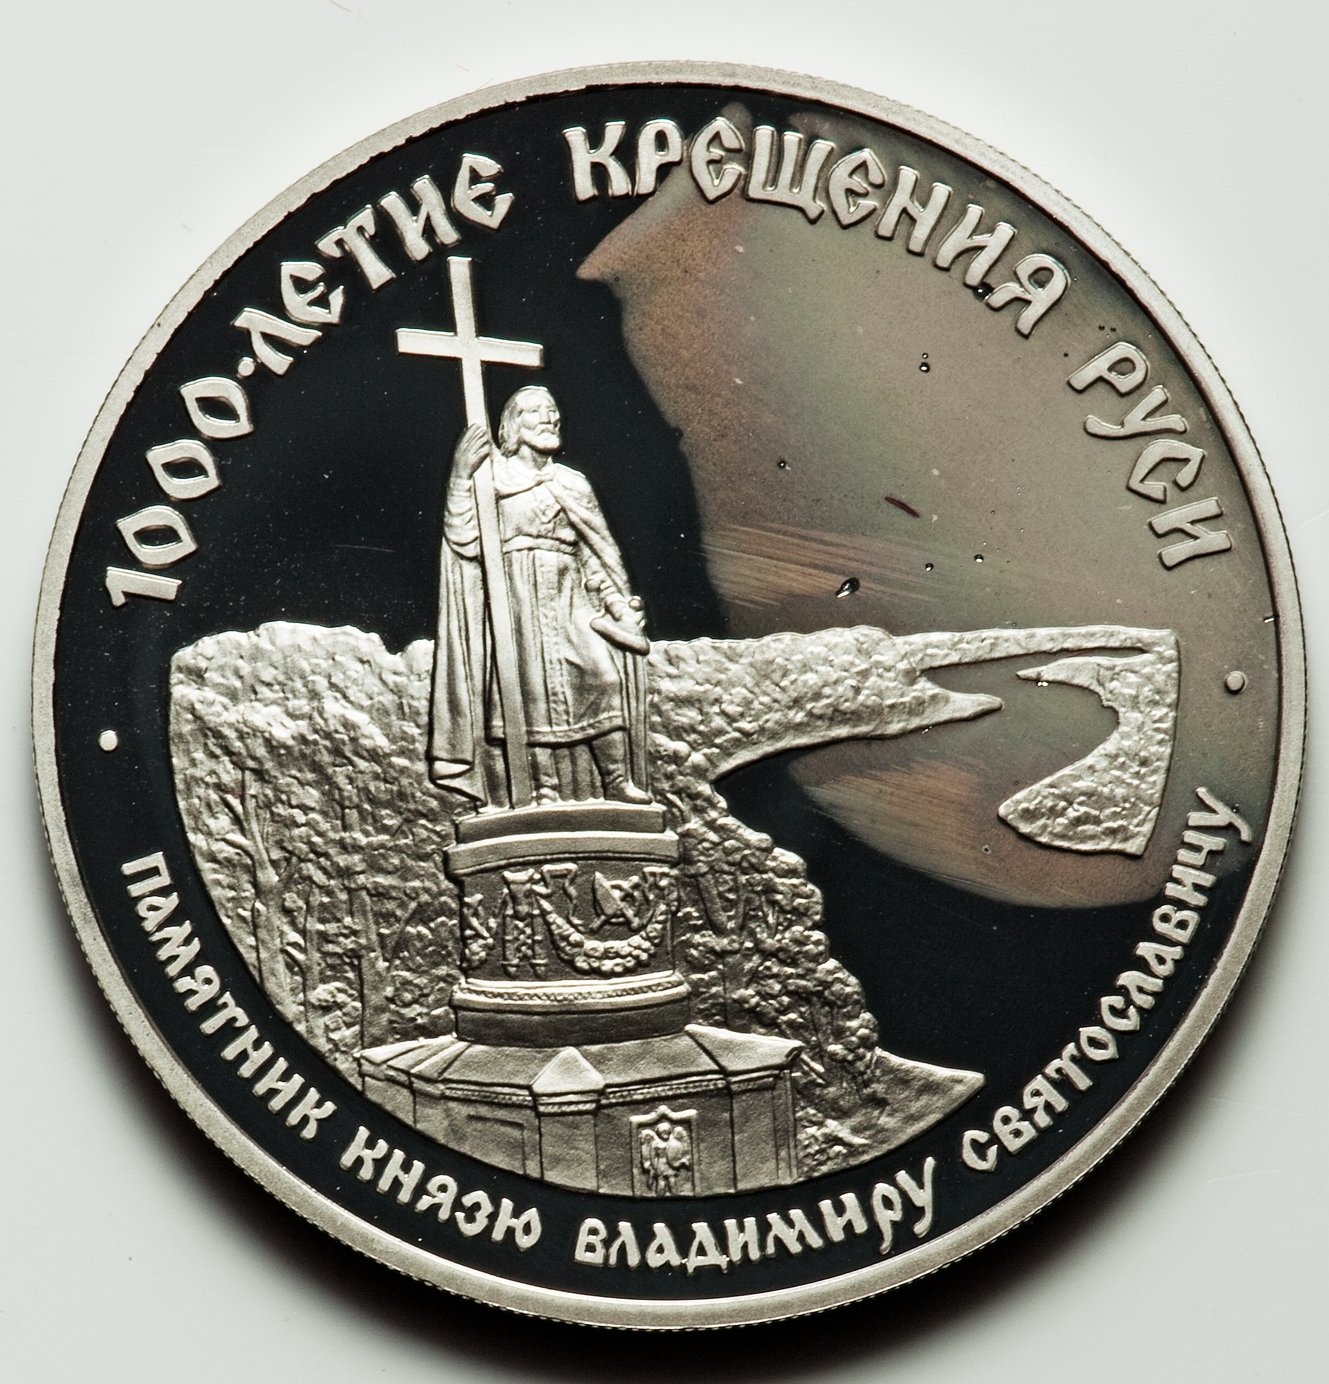 Paladium 1000 Rubles Obv.jpg